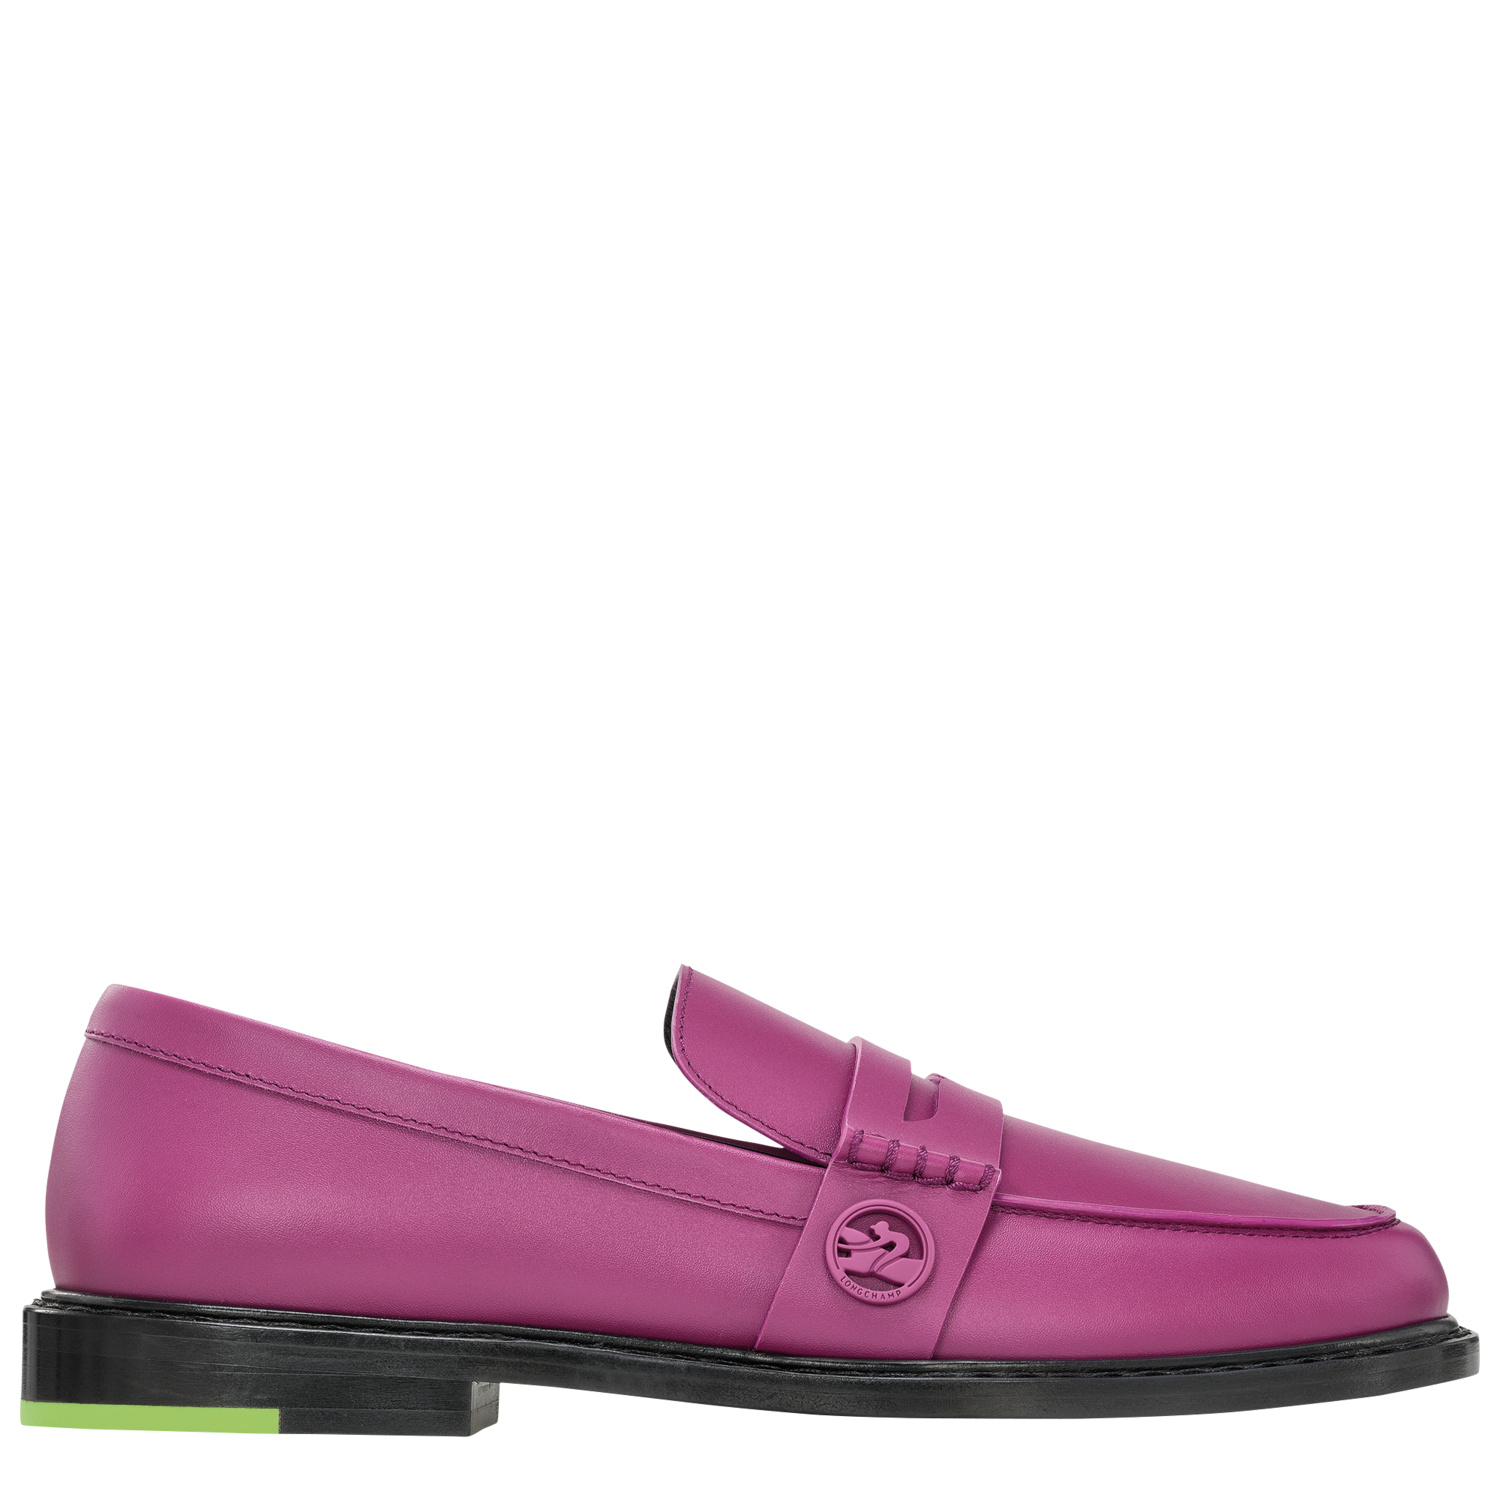 Longchamp Loafer Box-trot In Violette